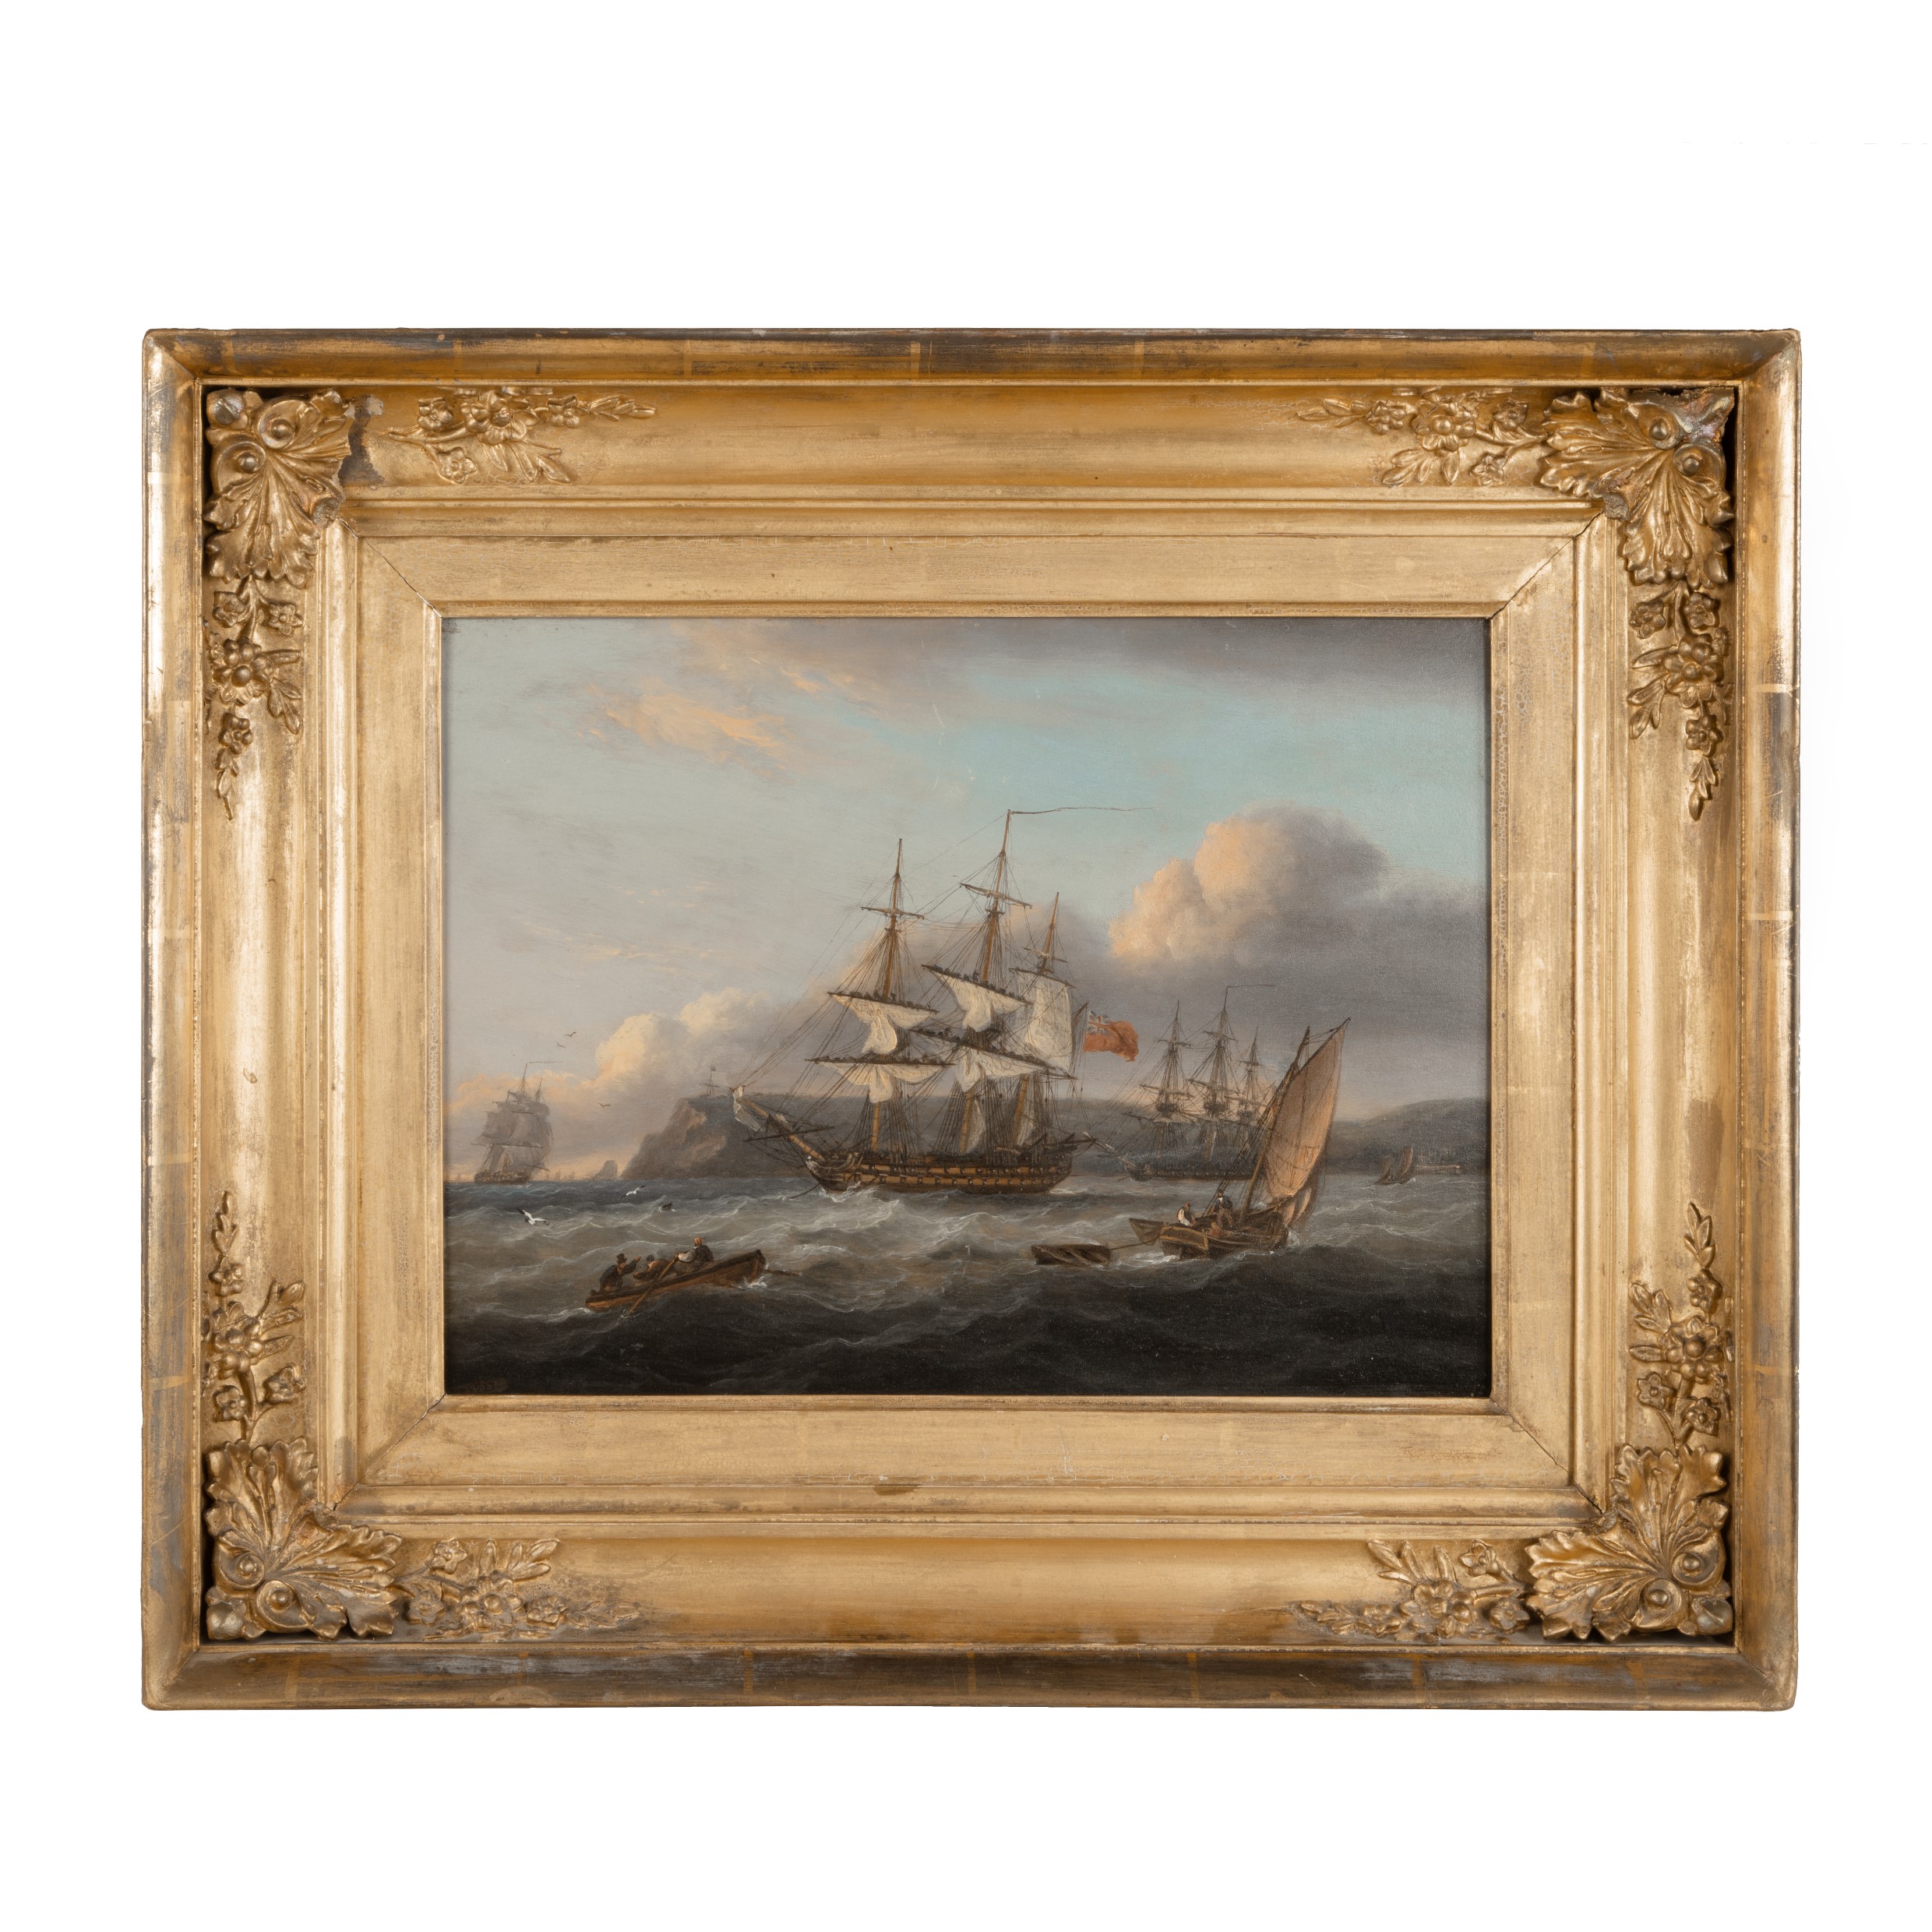 THOMAS LUNY (BRITISH, 1759-1837)  HMS Bellerophon